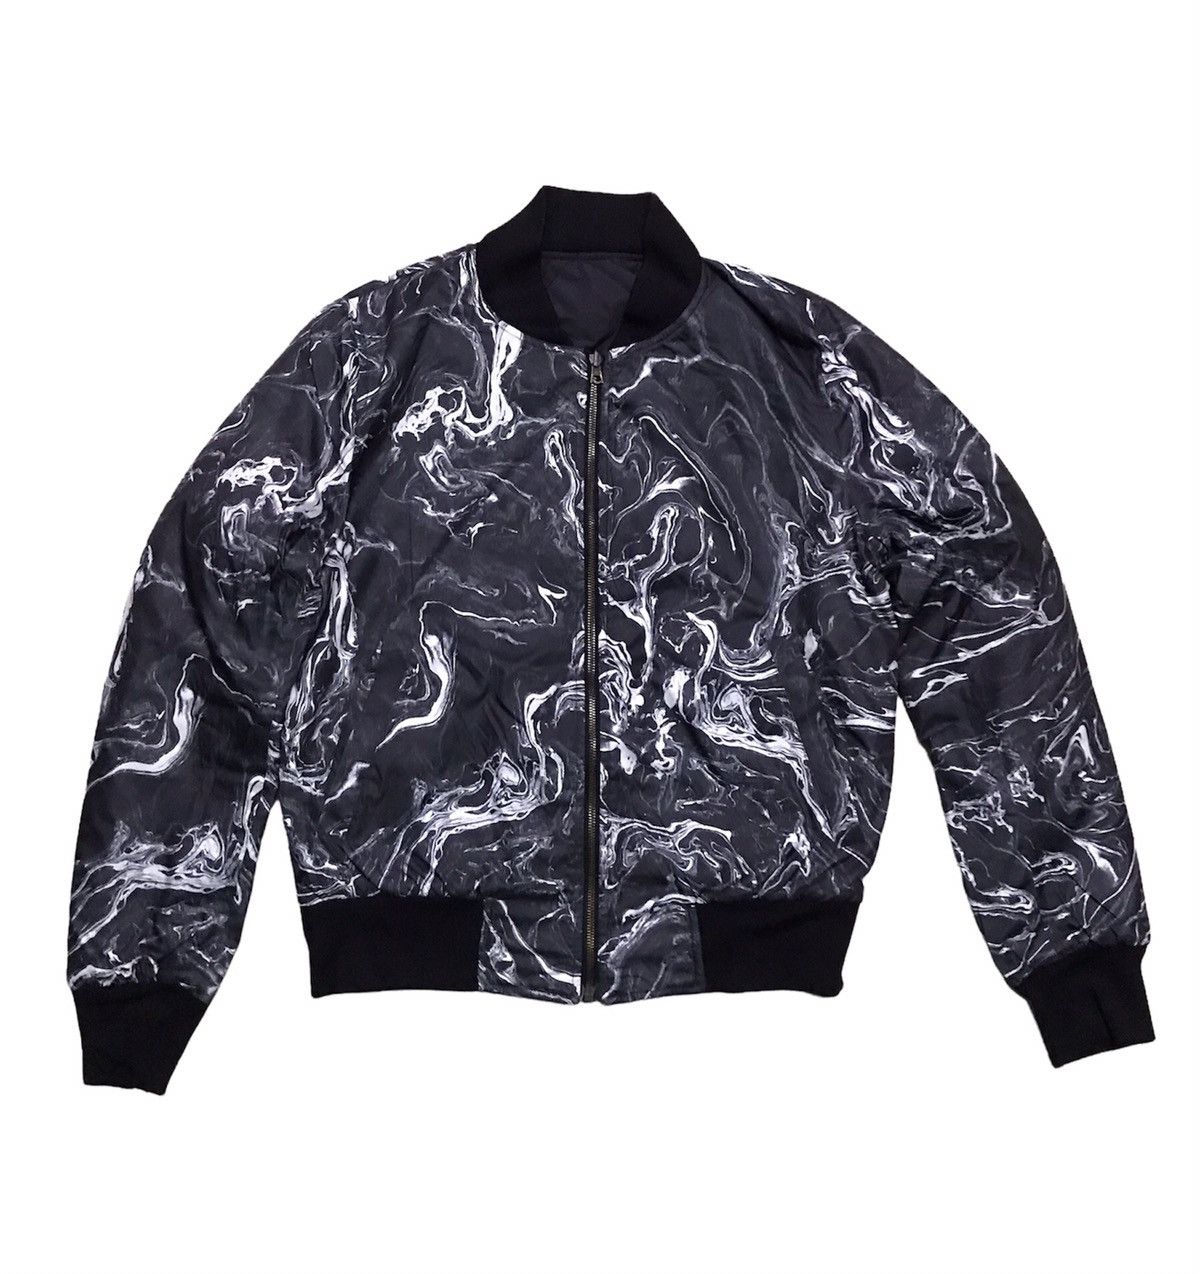 Sandro Sandro Paris reversible jacket marble smoke | Grailed